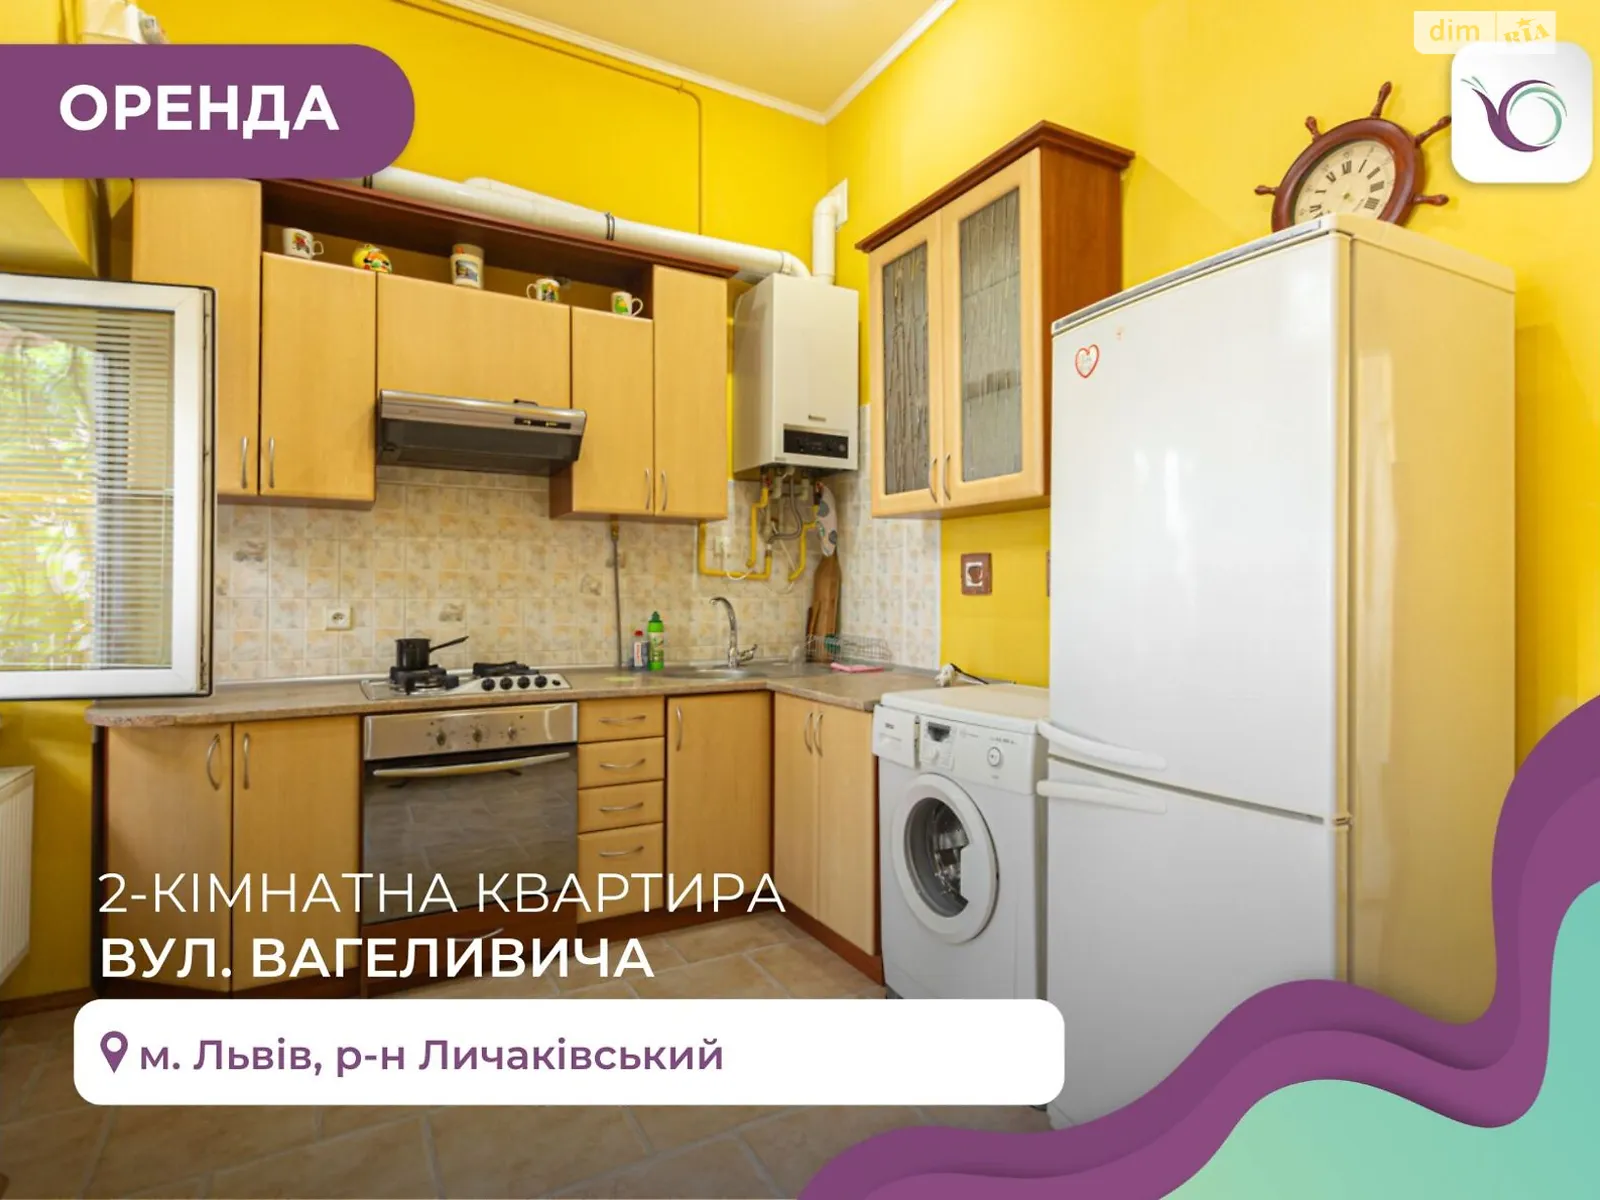 Сдается в аренду 2-комнатная квартира 51 кв. м в Львове, ул. Вагилевича - фото 1